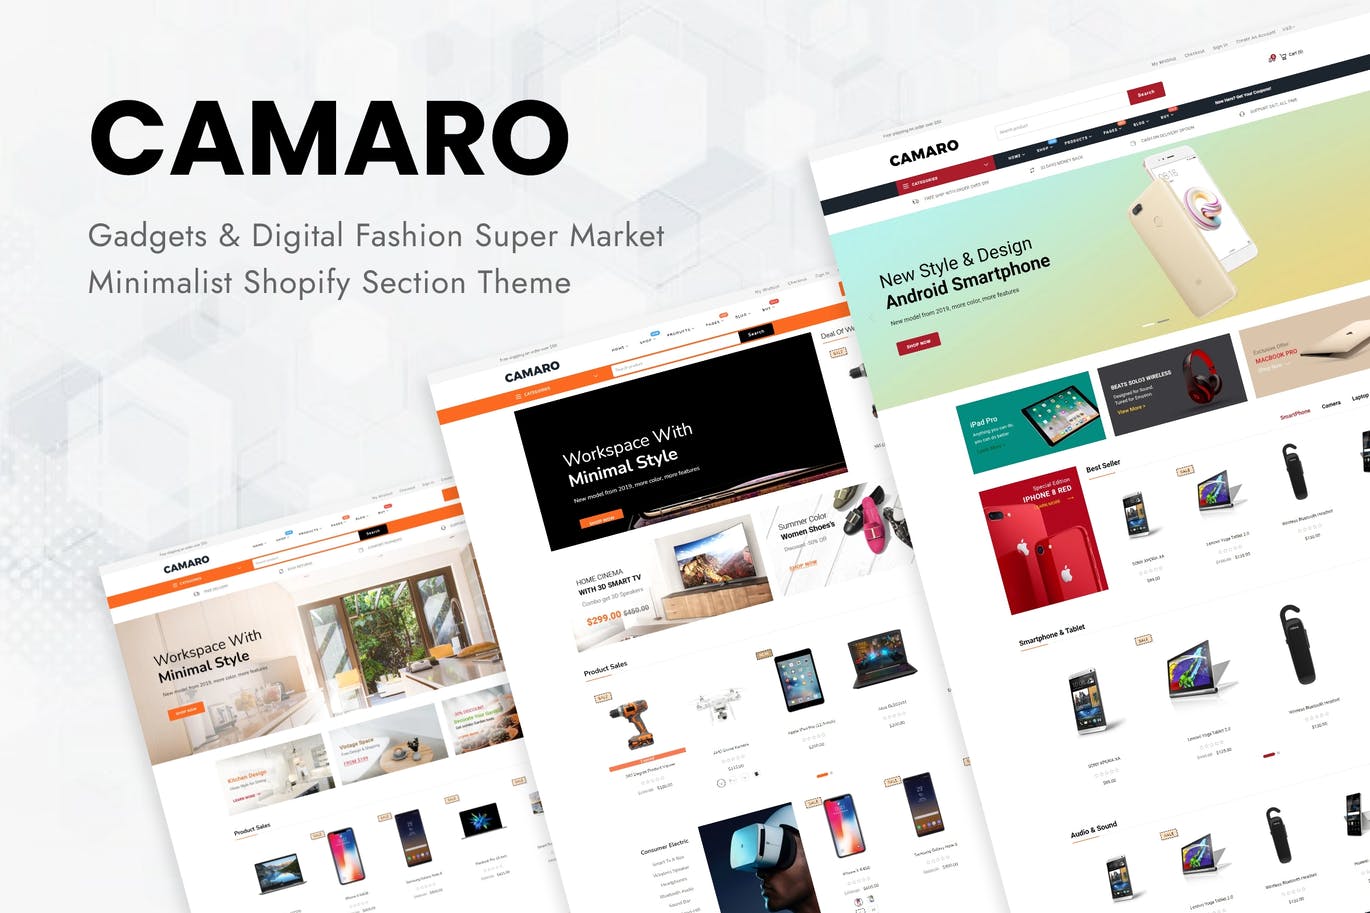 Camaro - Gadgets - Digital Fashion Super Market Minimalist Shopify Section Theme